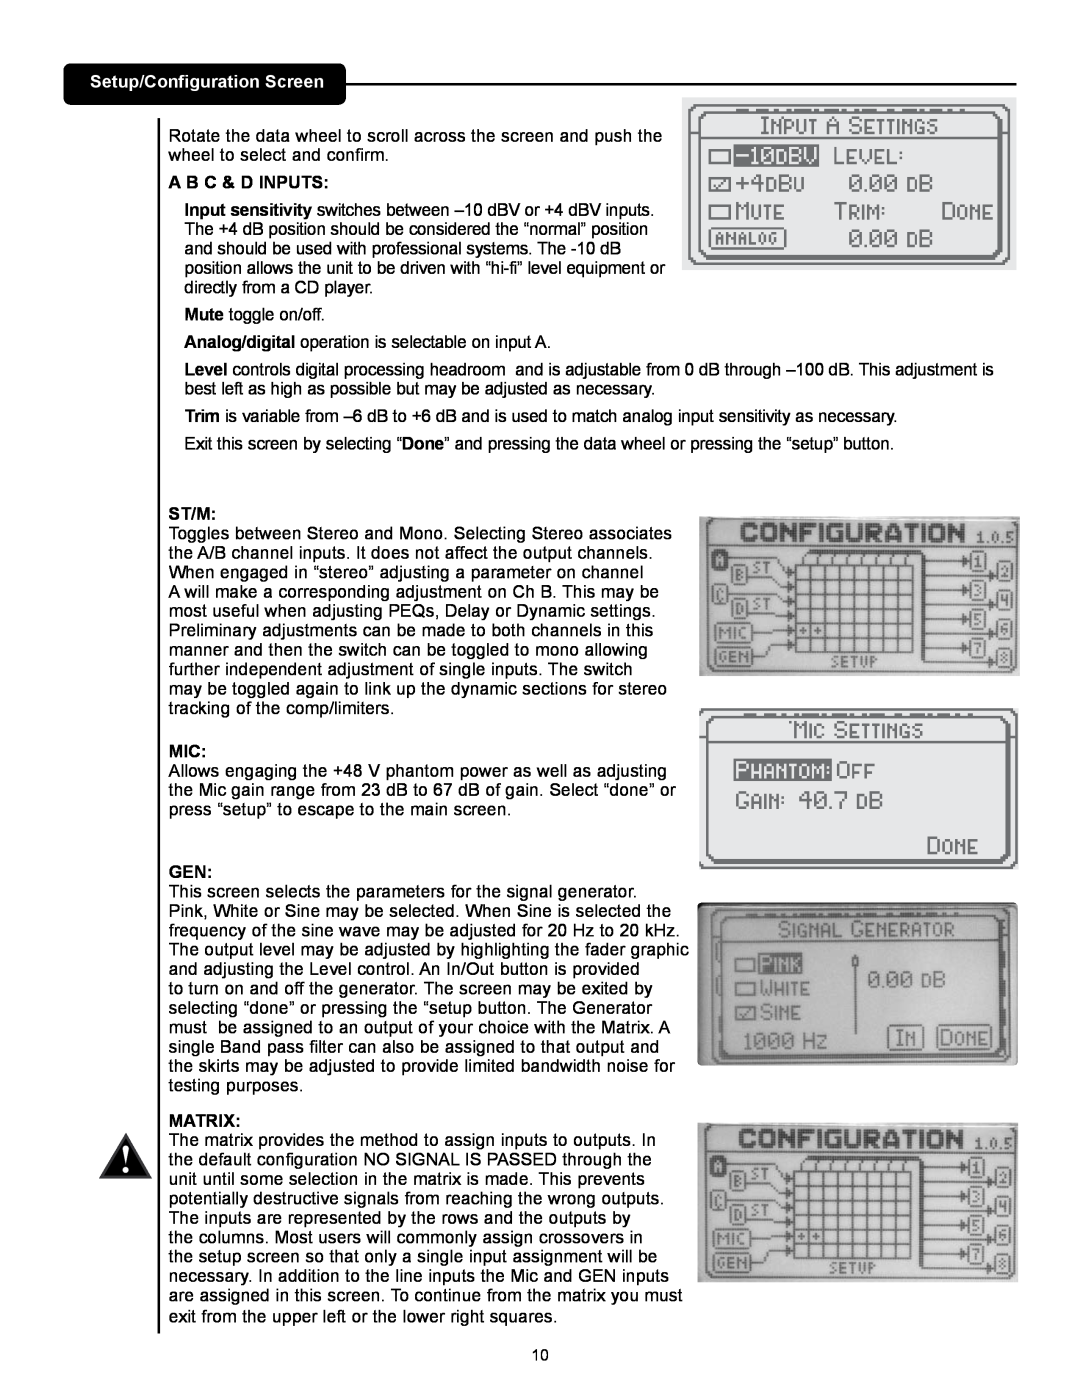 Peavey VSX 48 manual Setup/Configuration Screen, A B C & D Inputs, St/M, Matrix 